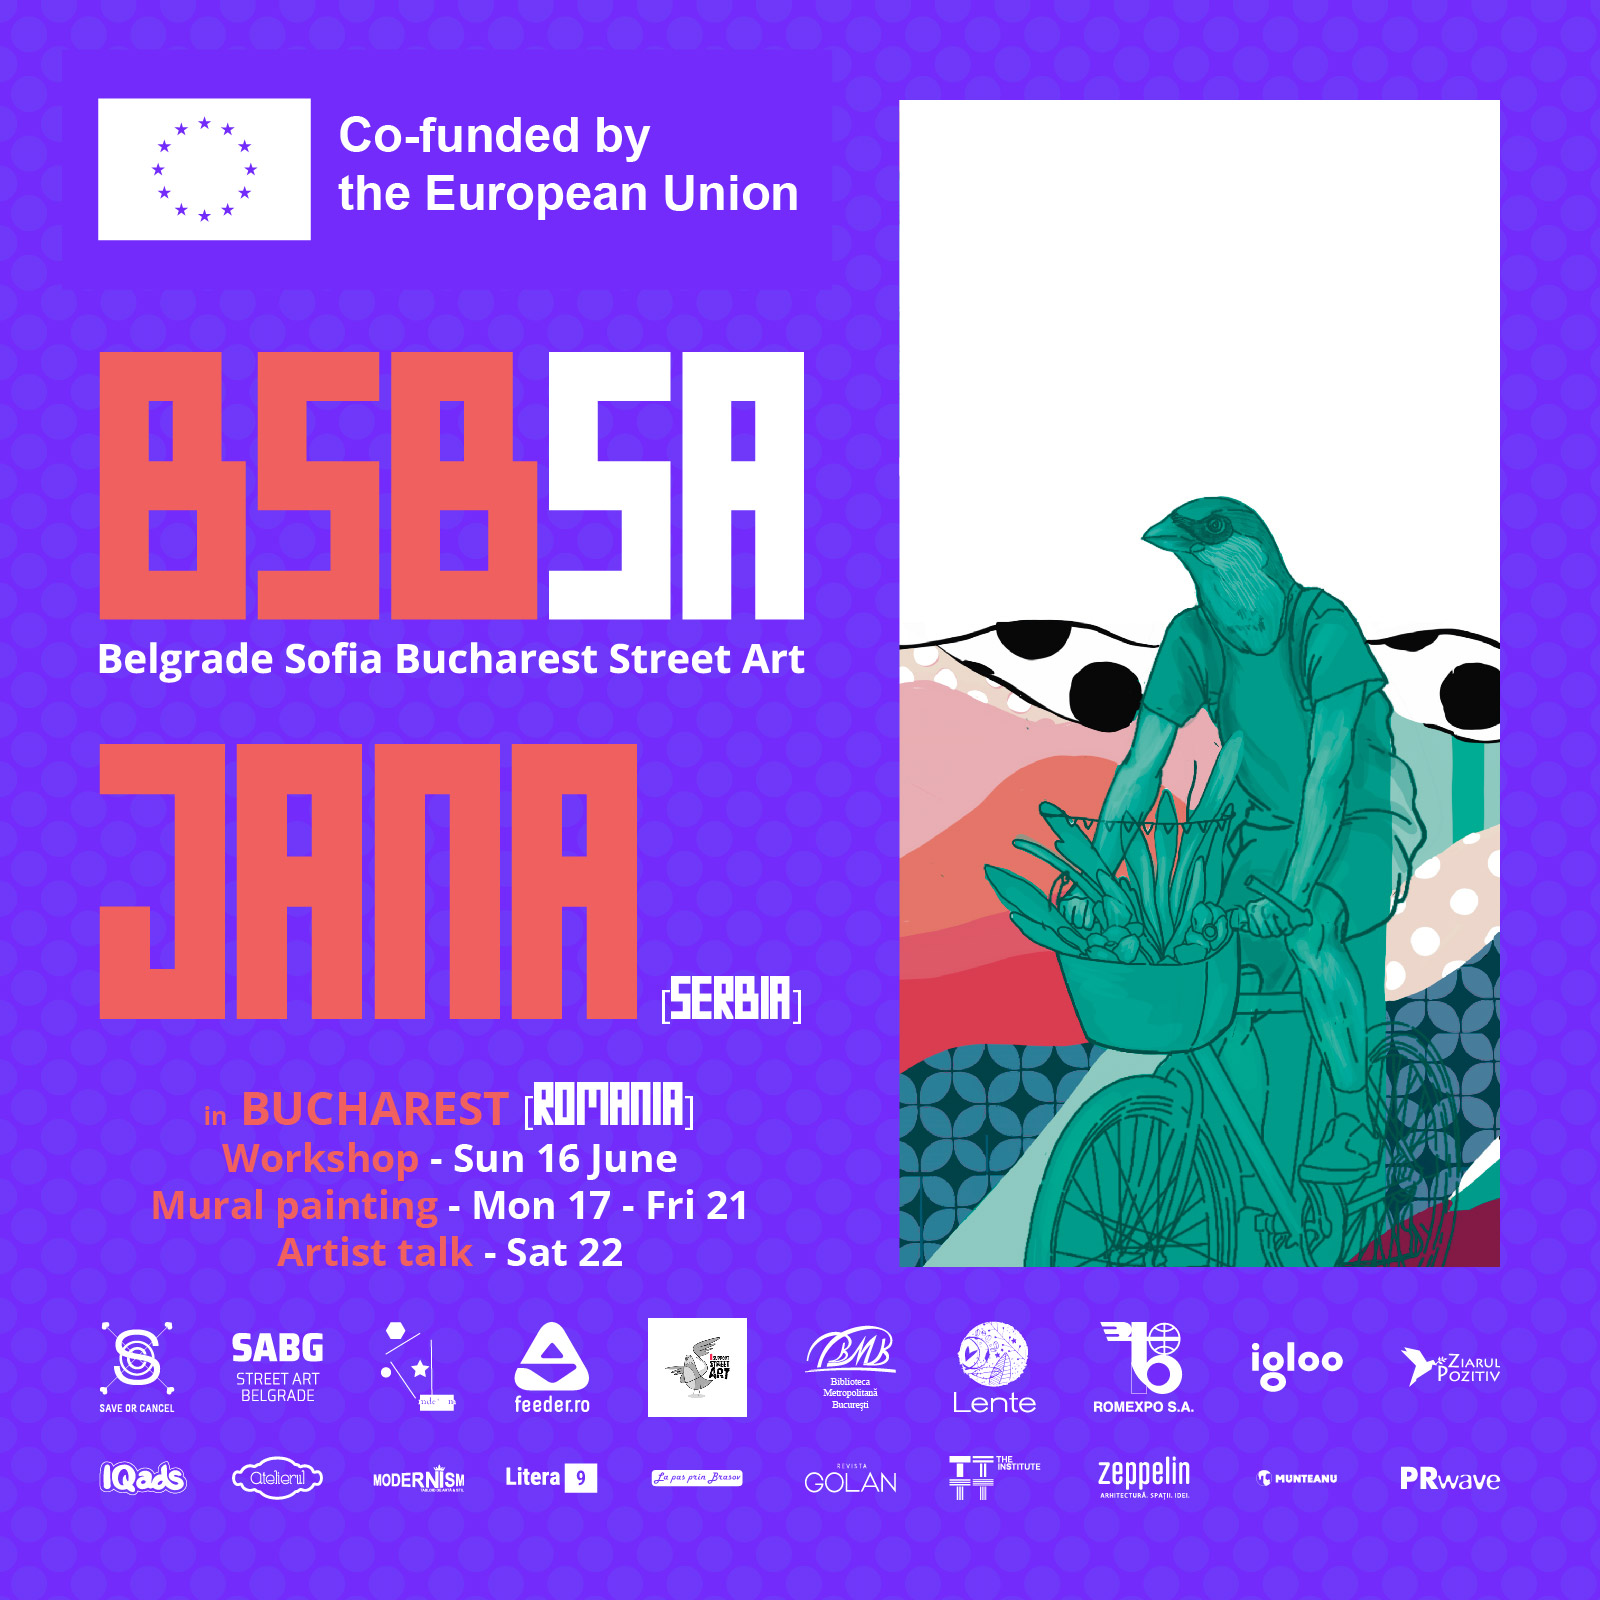 BSBSA hosts the first intervention created by Serbian artist Jana Danilović in Bucharest